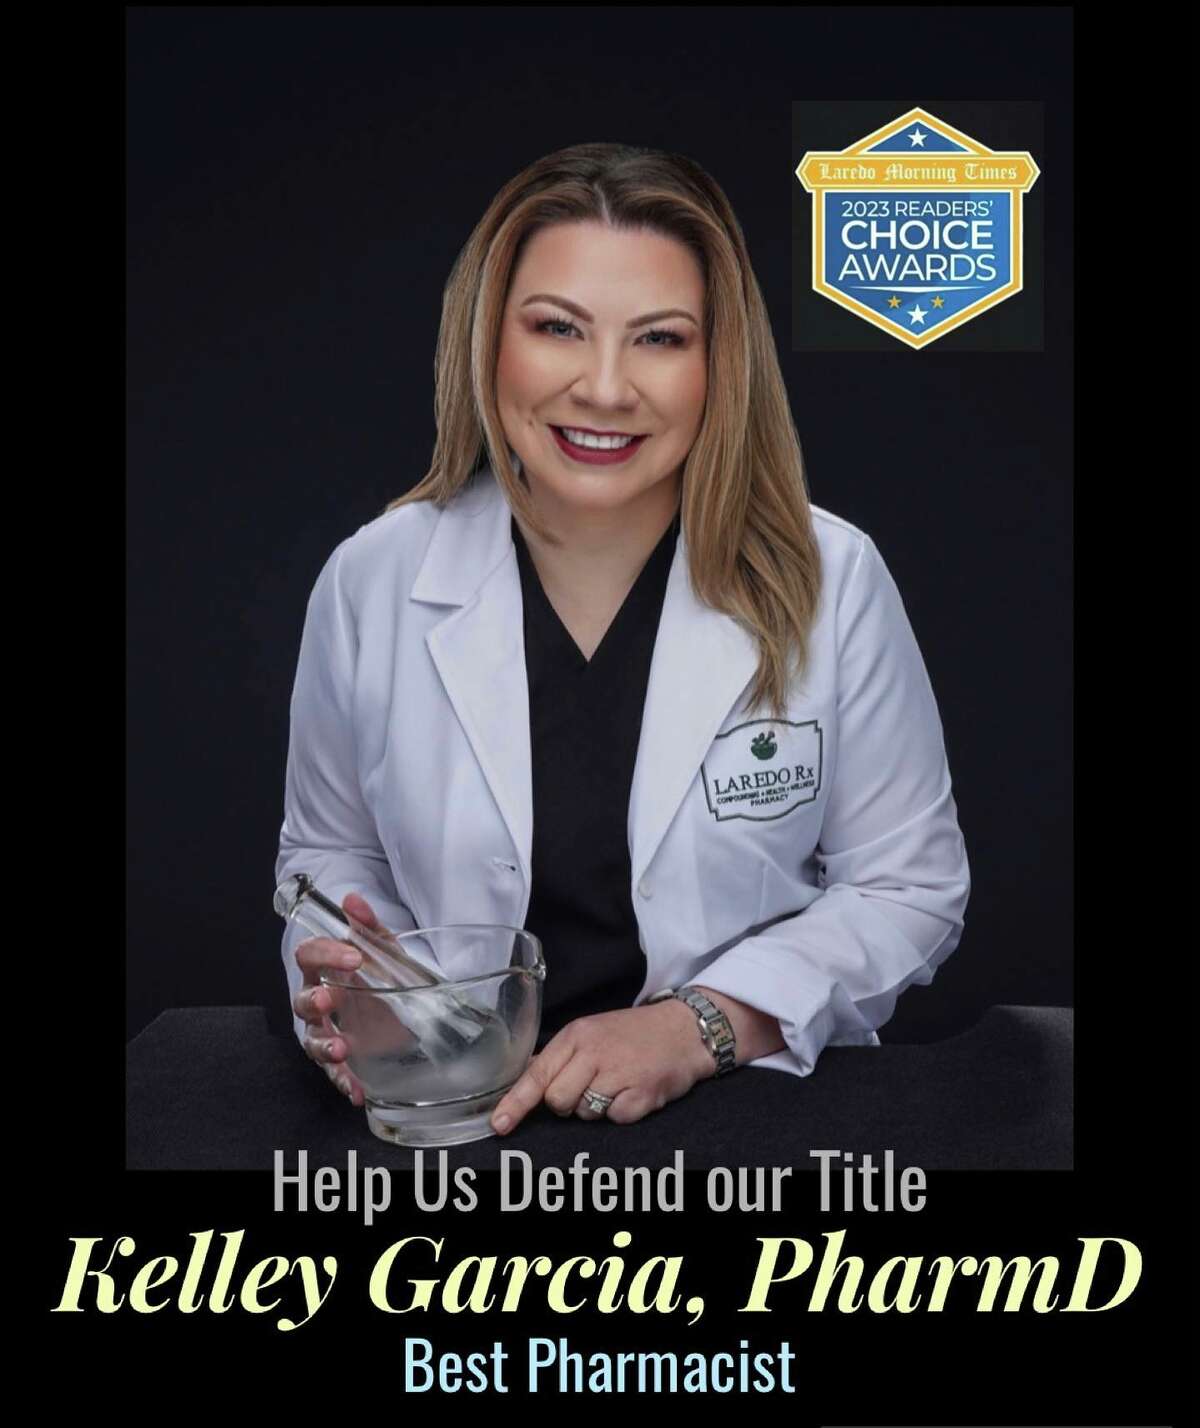 Best Pharmacist Dr. Kelley Garcia, Laredo RX, 7109 N Bartlett Ave Suite 203